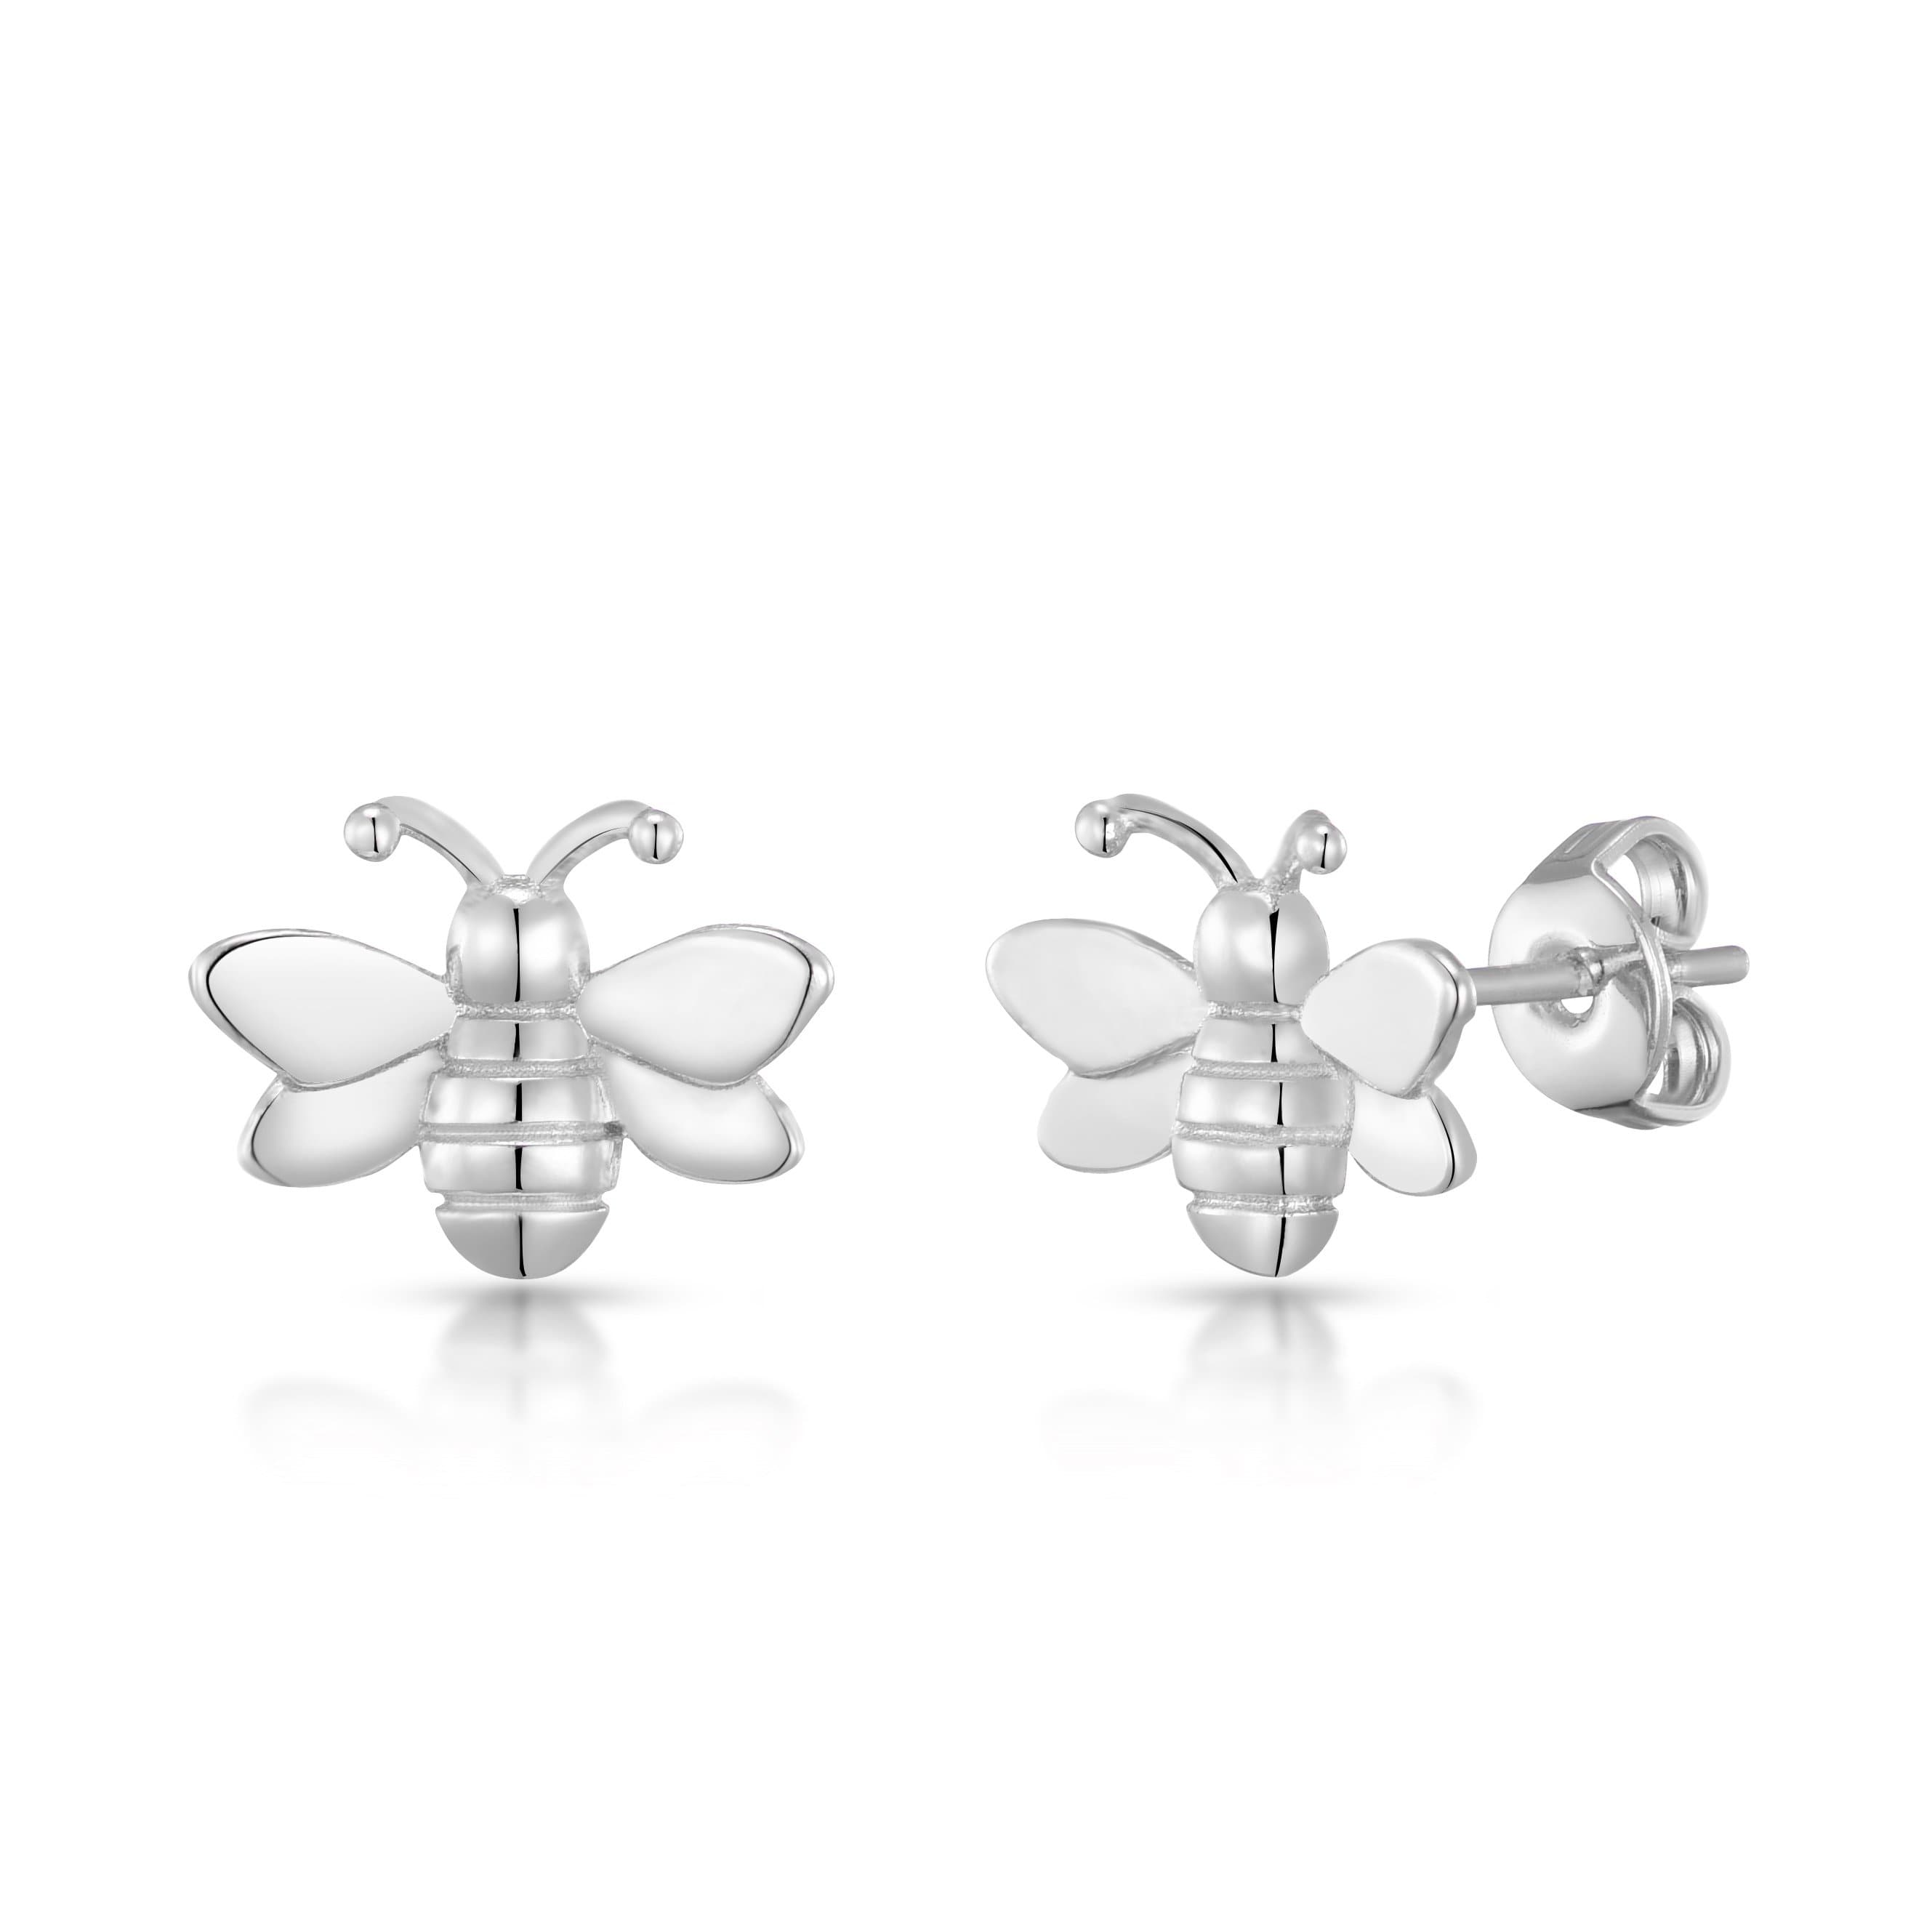 Silver Plated Bumble Bee Earrings by Philip Jones Jewellery